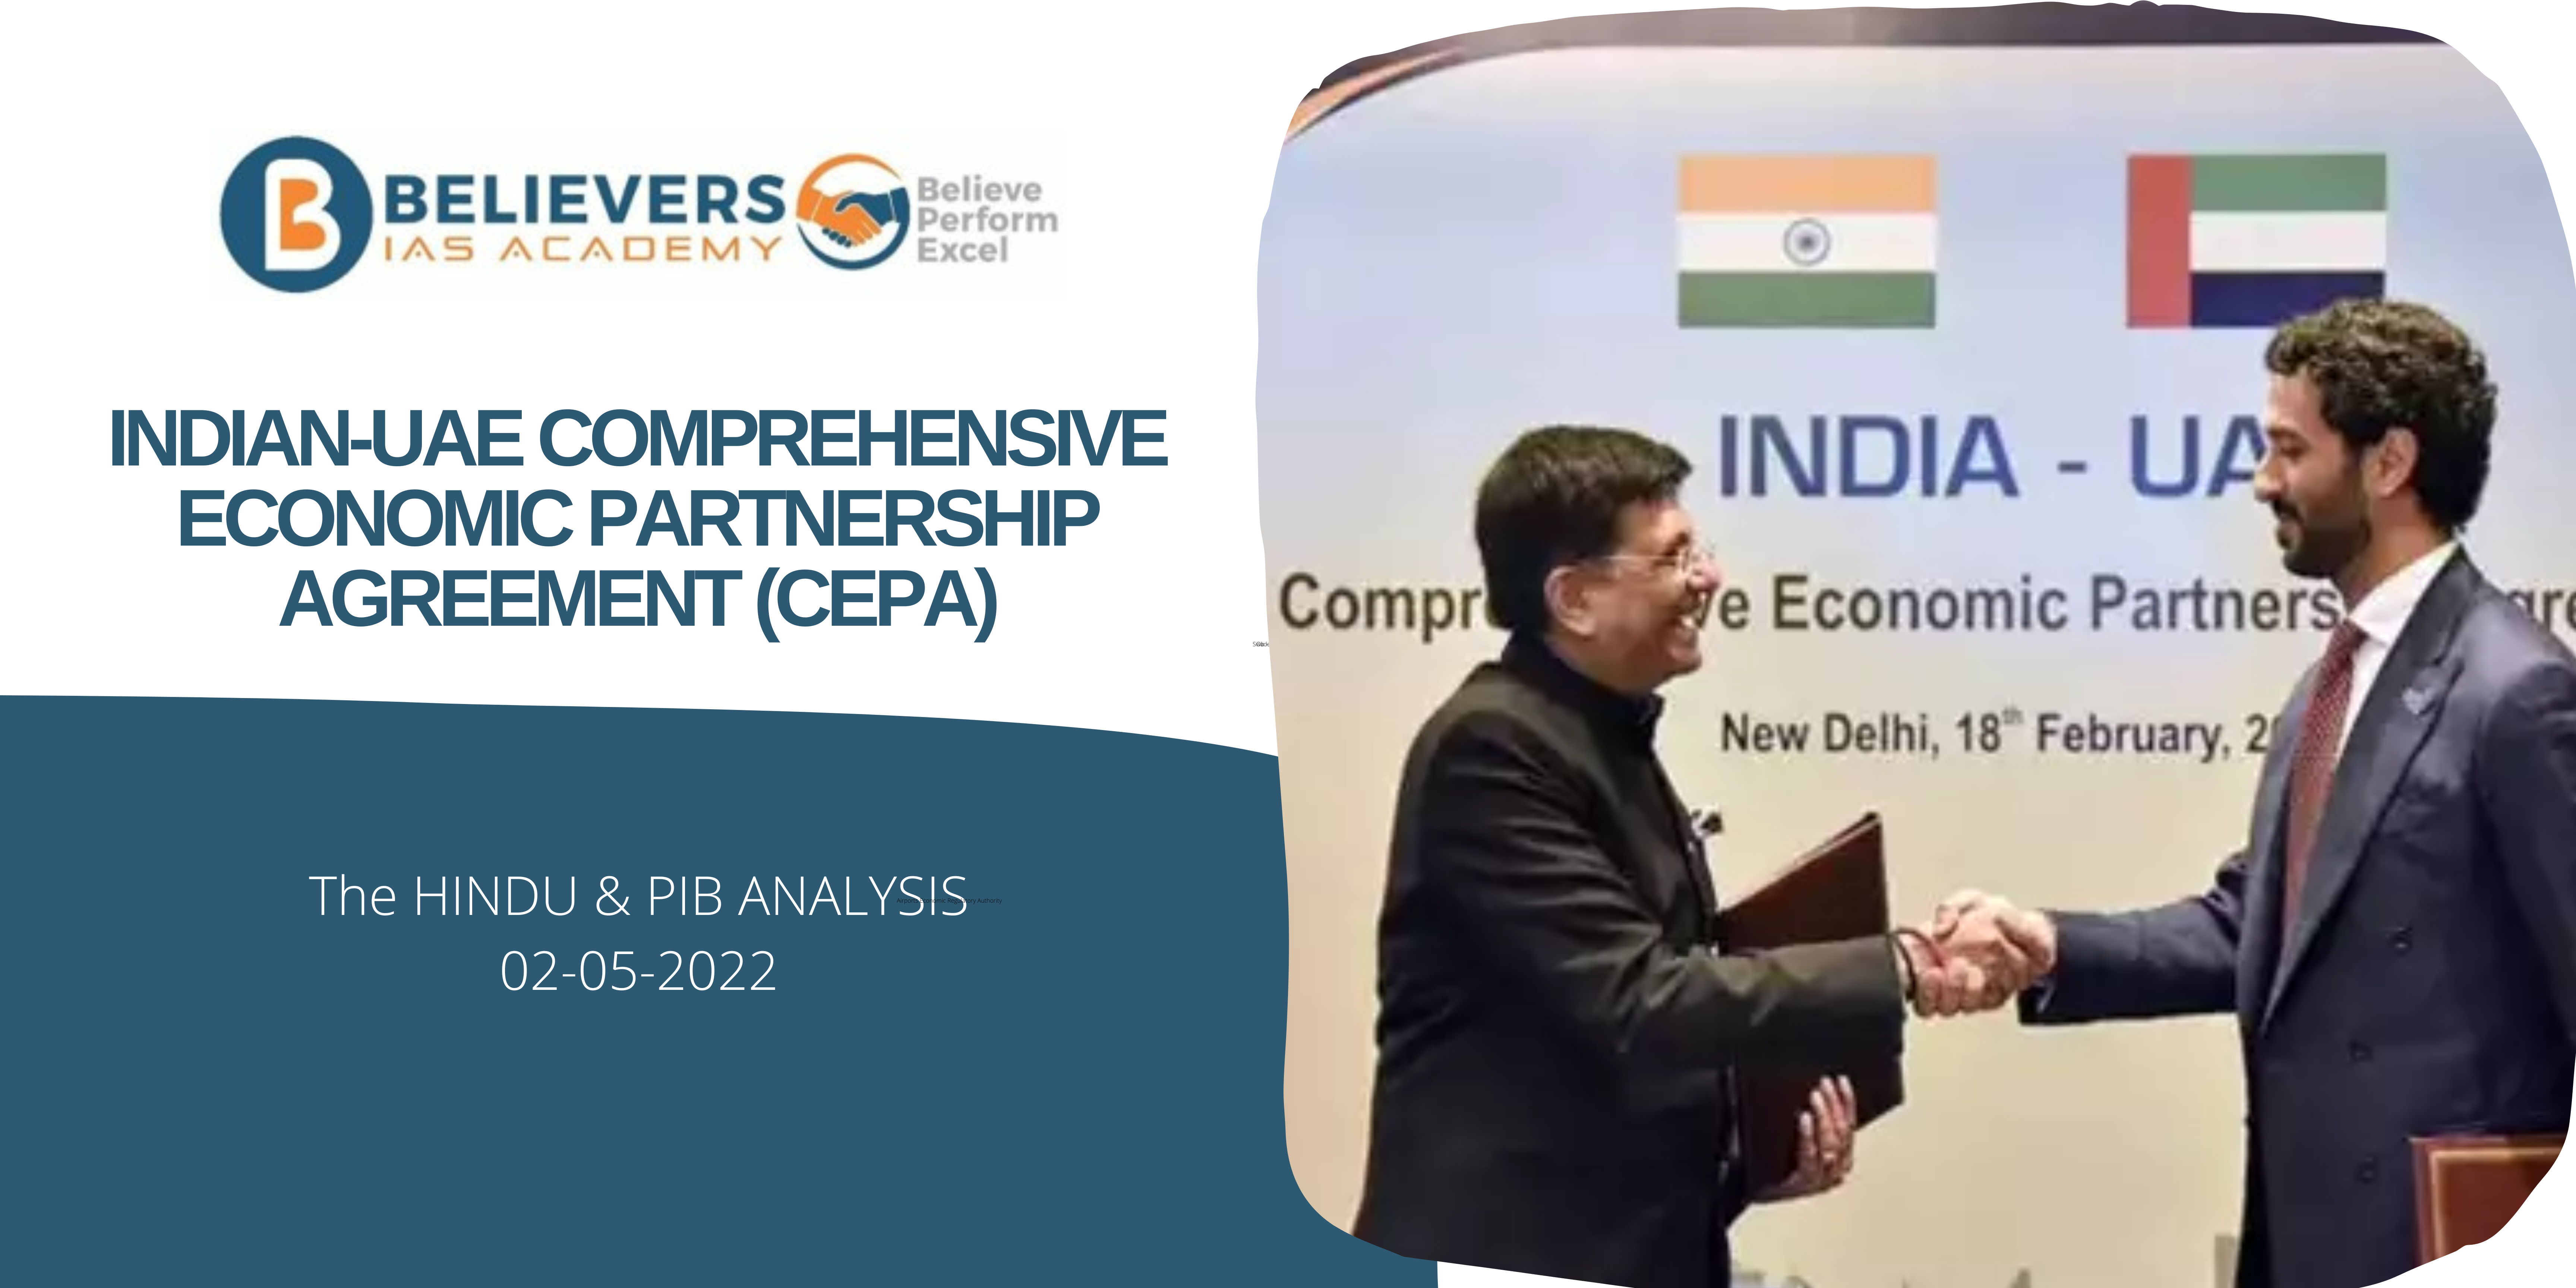 UPSC Current affairs - Indian-UAE Comprehensive Economic Partnership Agreement (CEPA)